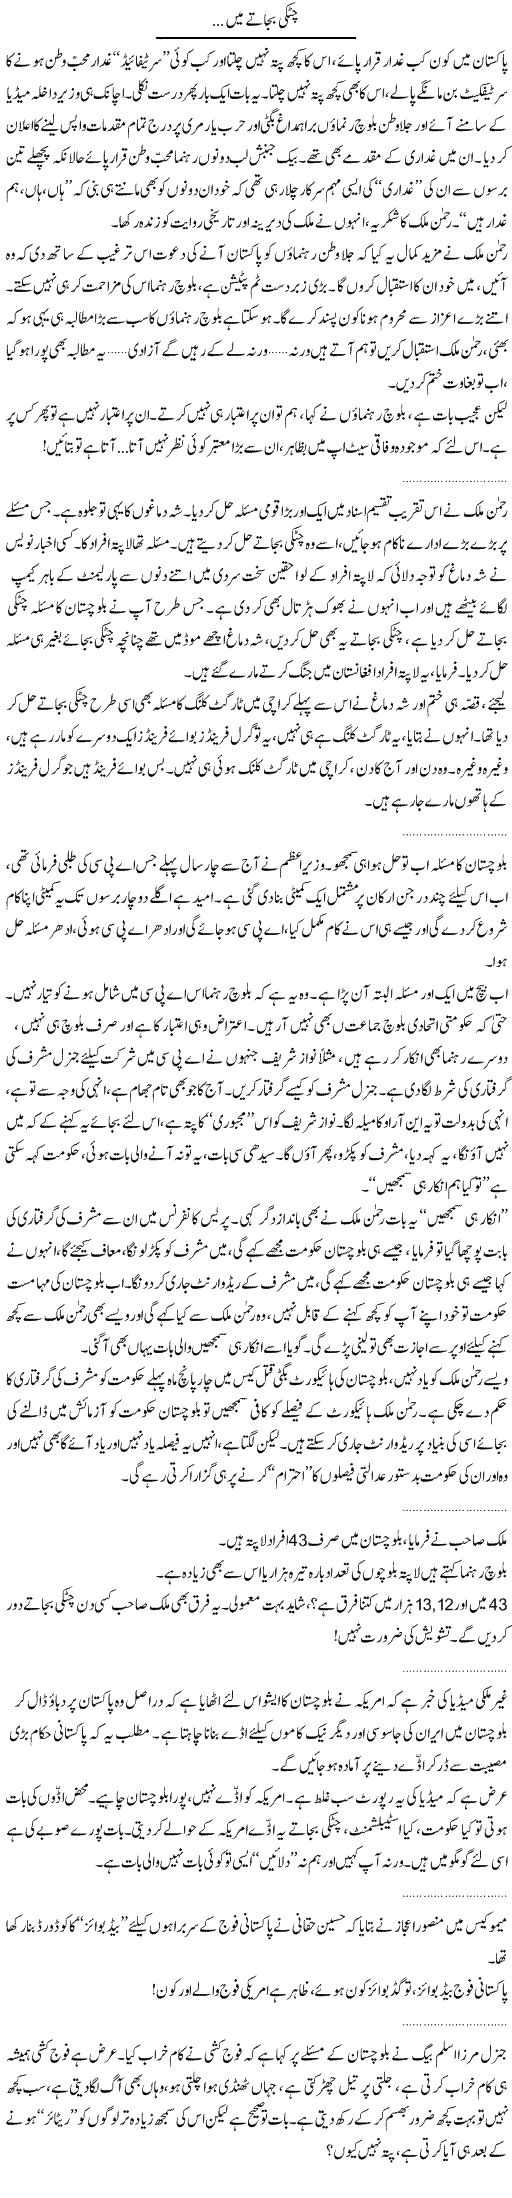 Balochistan Situation Express Column Abdullah Tariq 25 February 2012